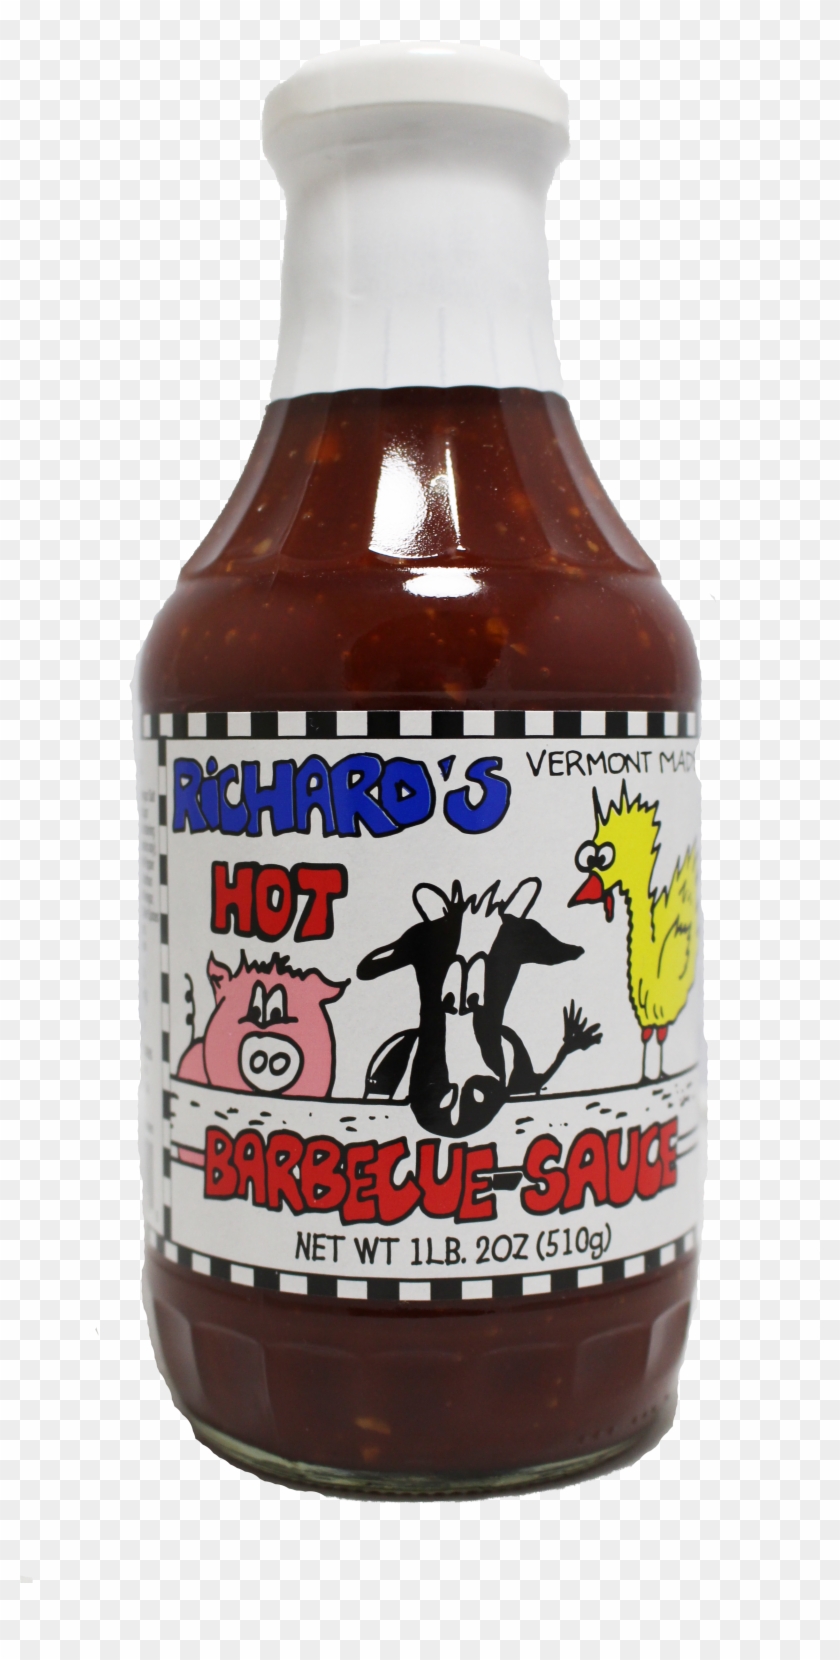 Richard's Hot Bbq Sauce - Richards Bbq Sauce Clipart #3663653